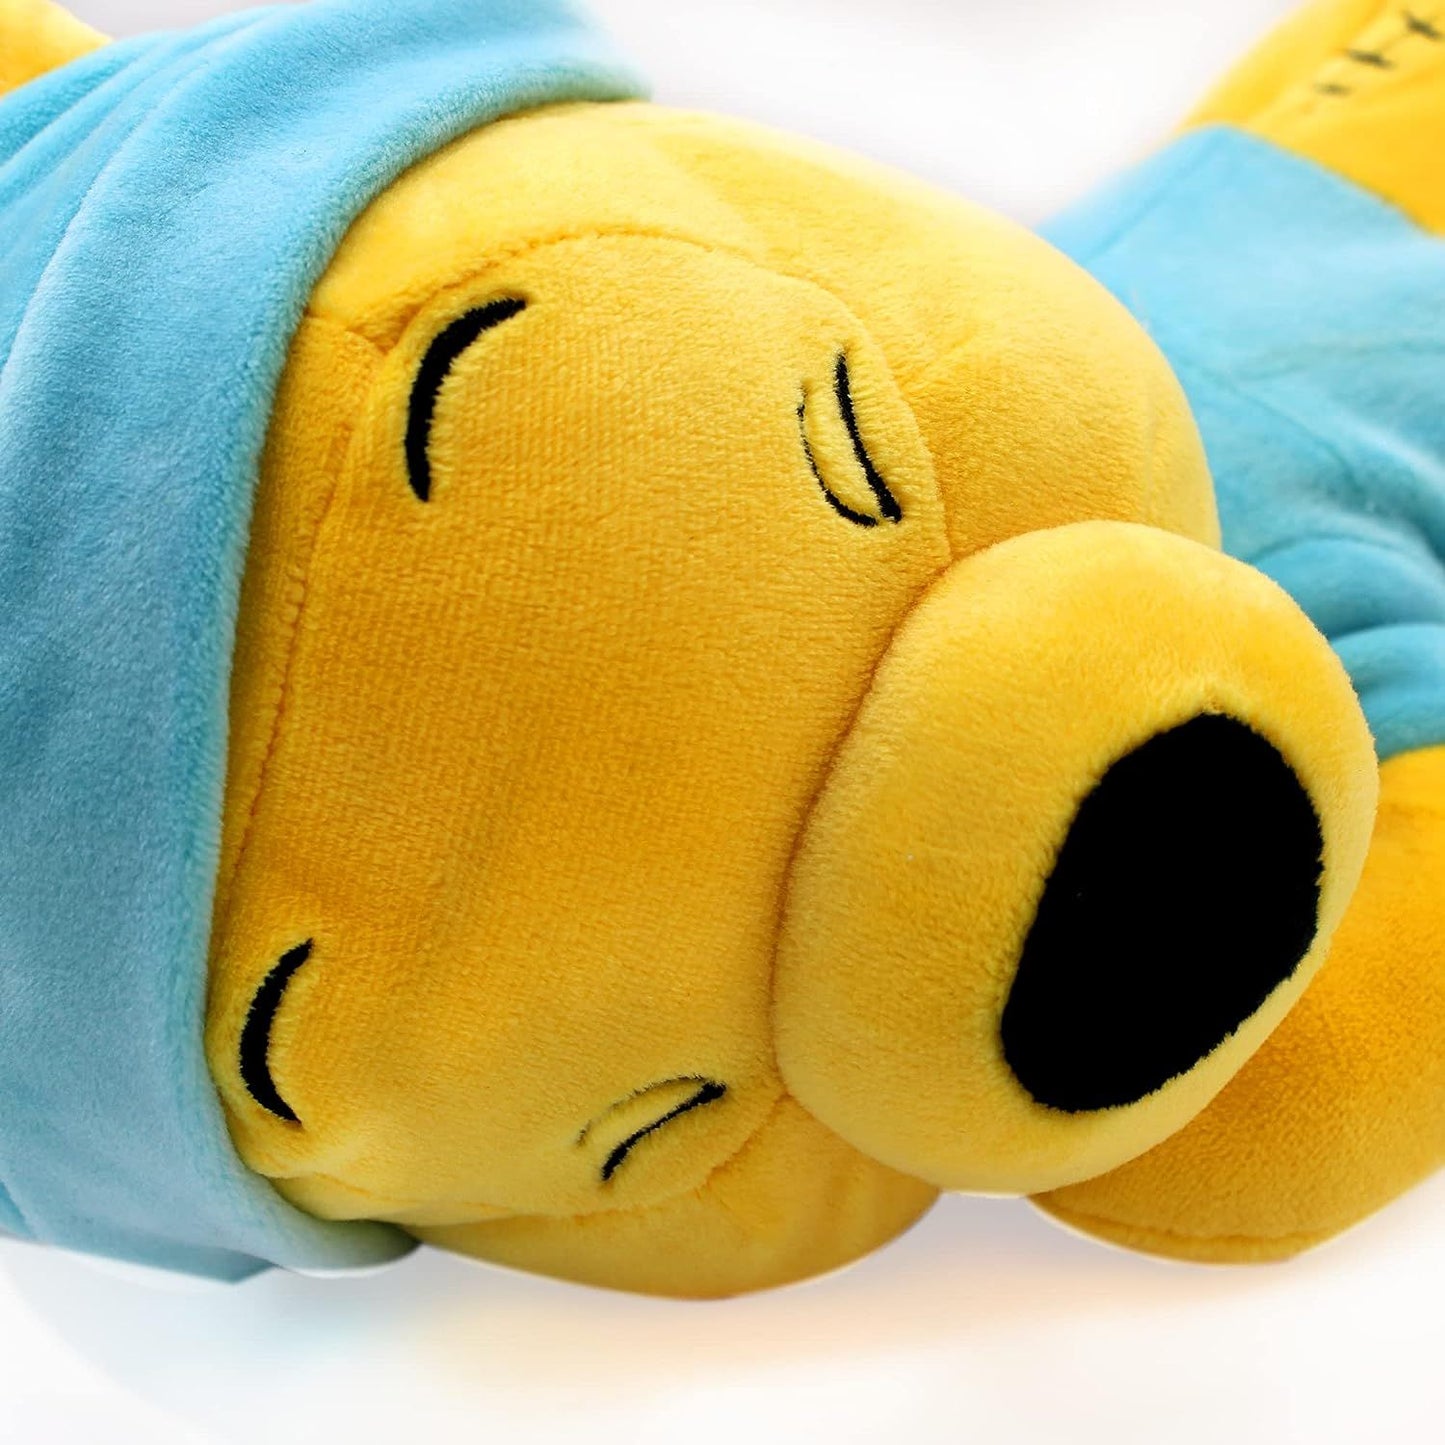 Disney Baby - SLeeping Babies winnie the pooh close up of face - Heretoserveyou